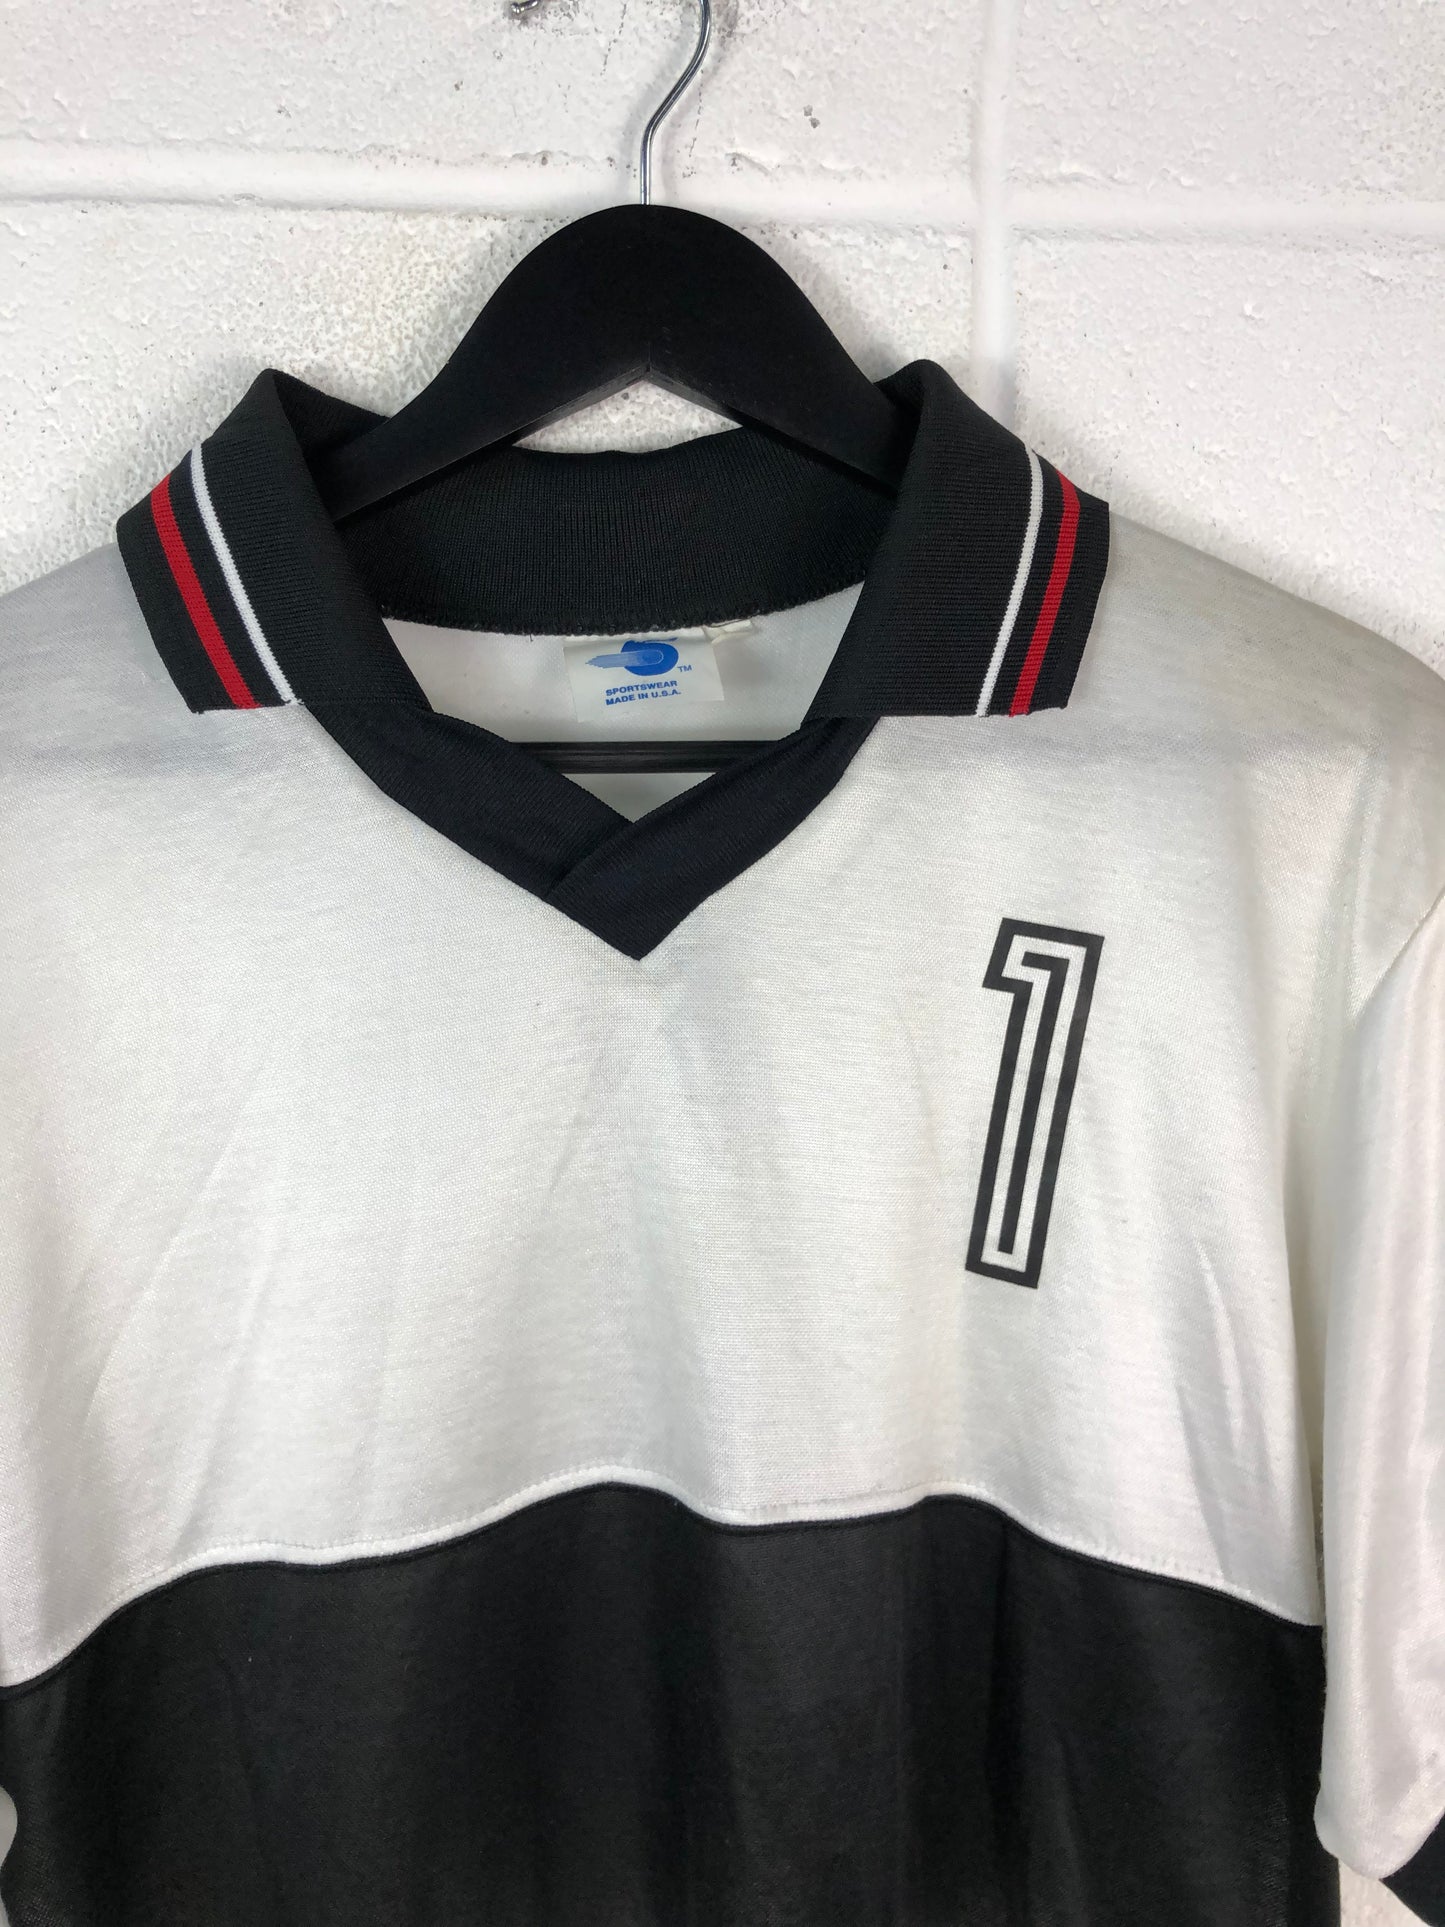 VTG 80's Black/White Collared #1 Soccer Jersey Sz L